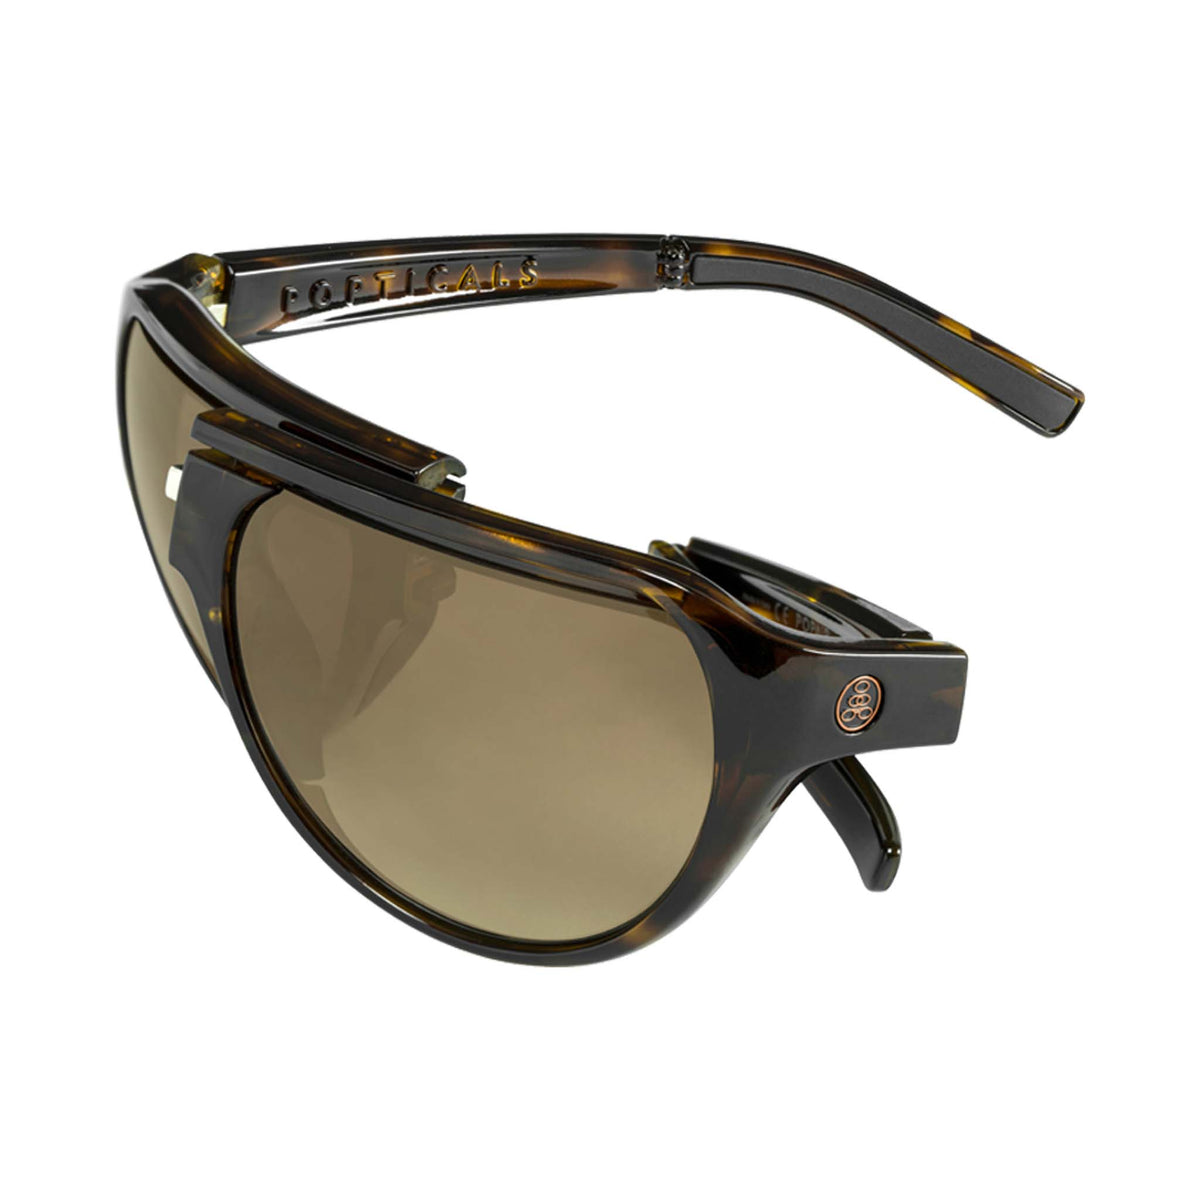 Popticals, Premium Compact Sunglasses, PopAir, 300010-CUNC, Polarized Sunglasses, Matte Tortoise Frame, Gradient Brown Lenses, Spider View